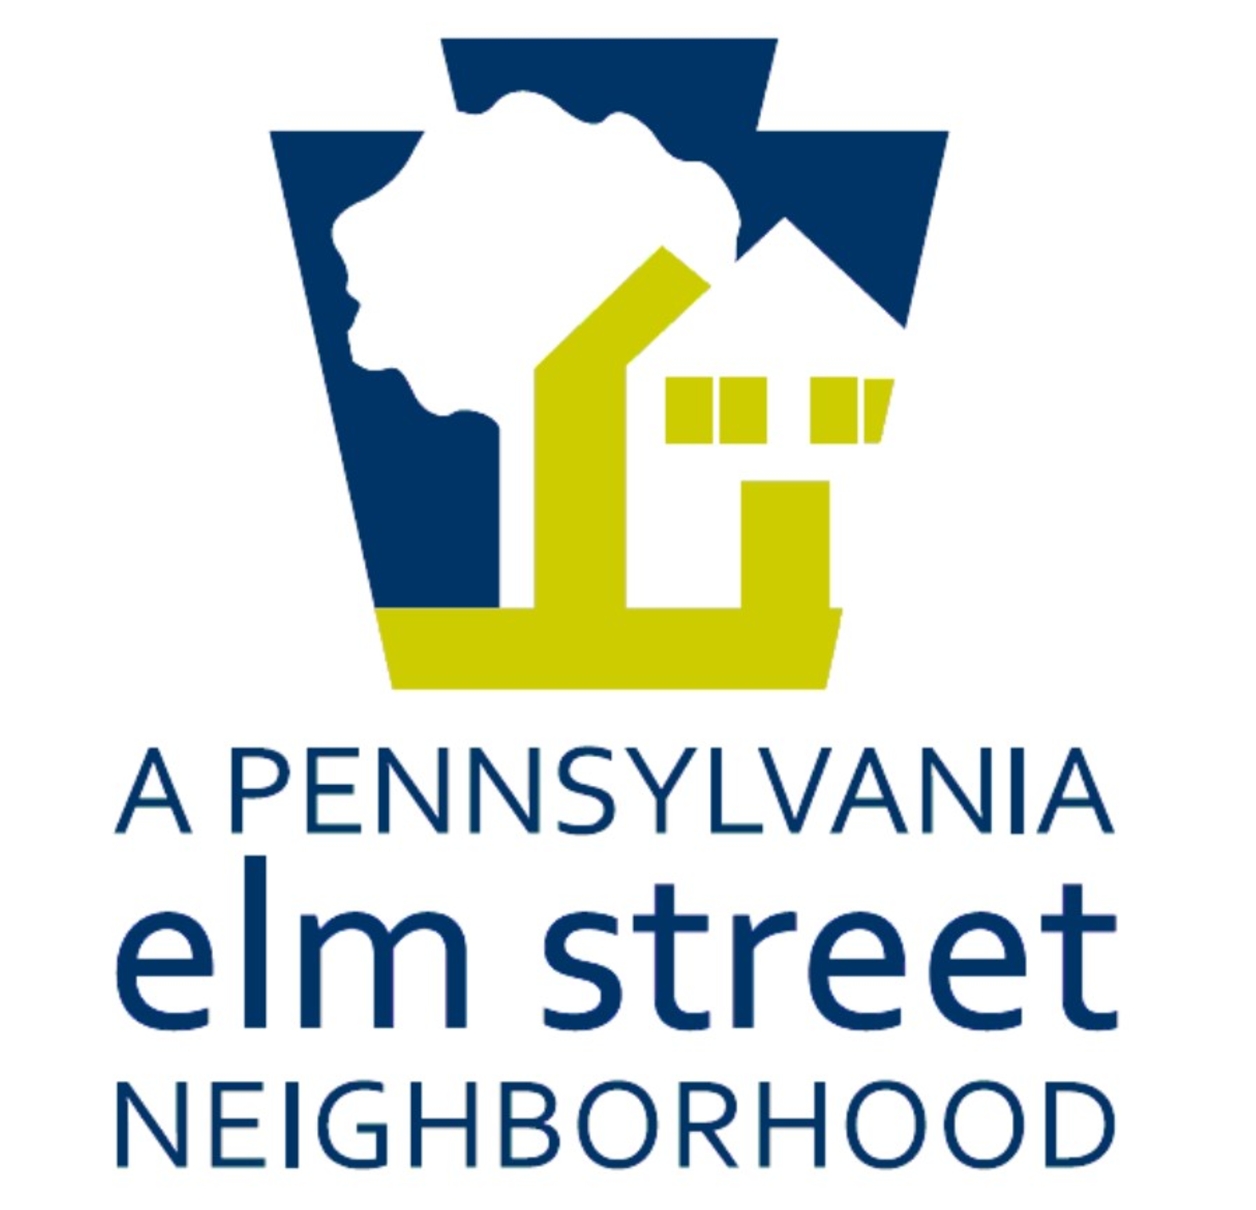 A Pennsylvania elm street neighborhood logo